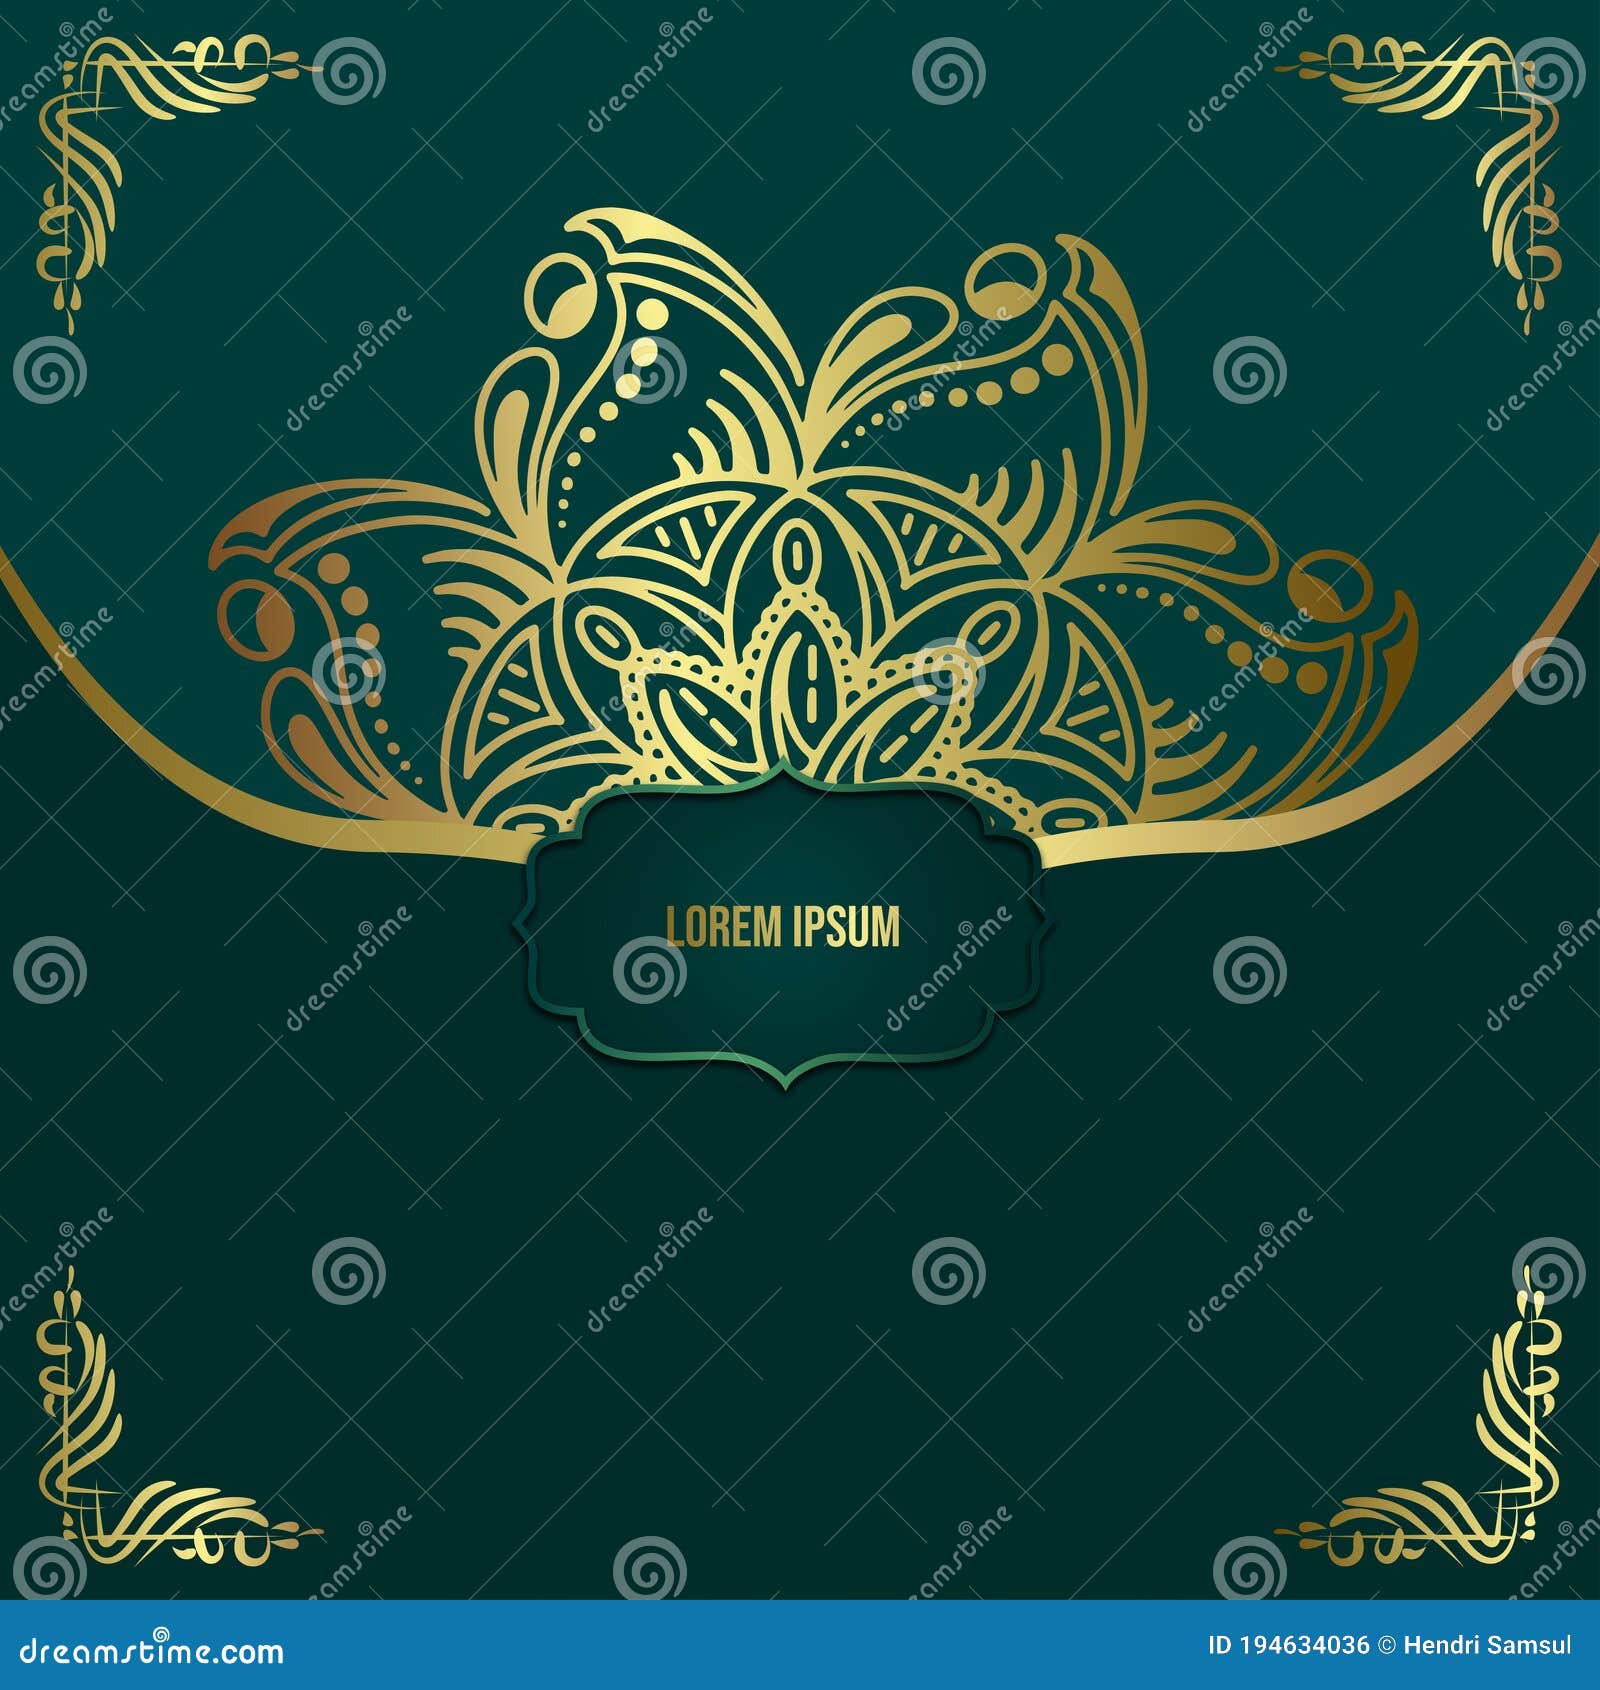 Premium Vector  Luxury ornamental mandala background in gold